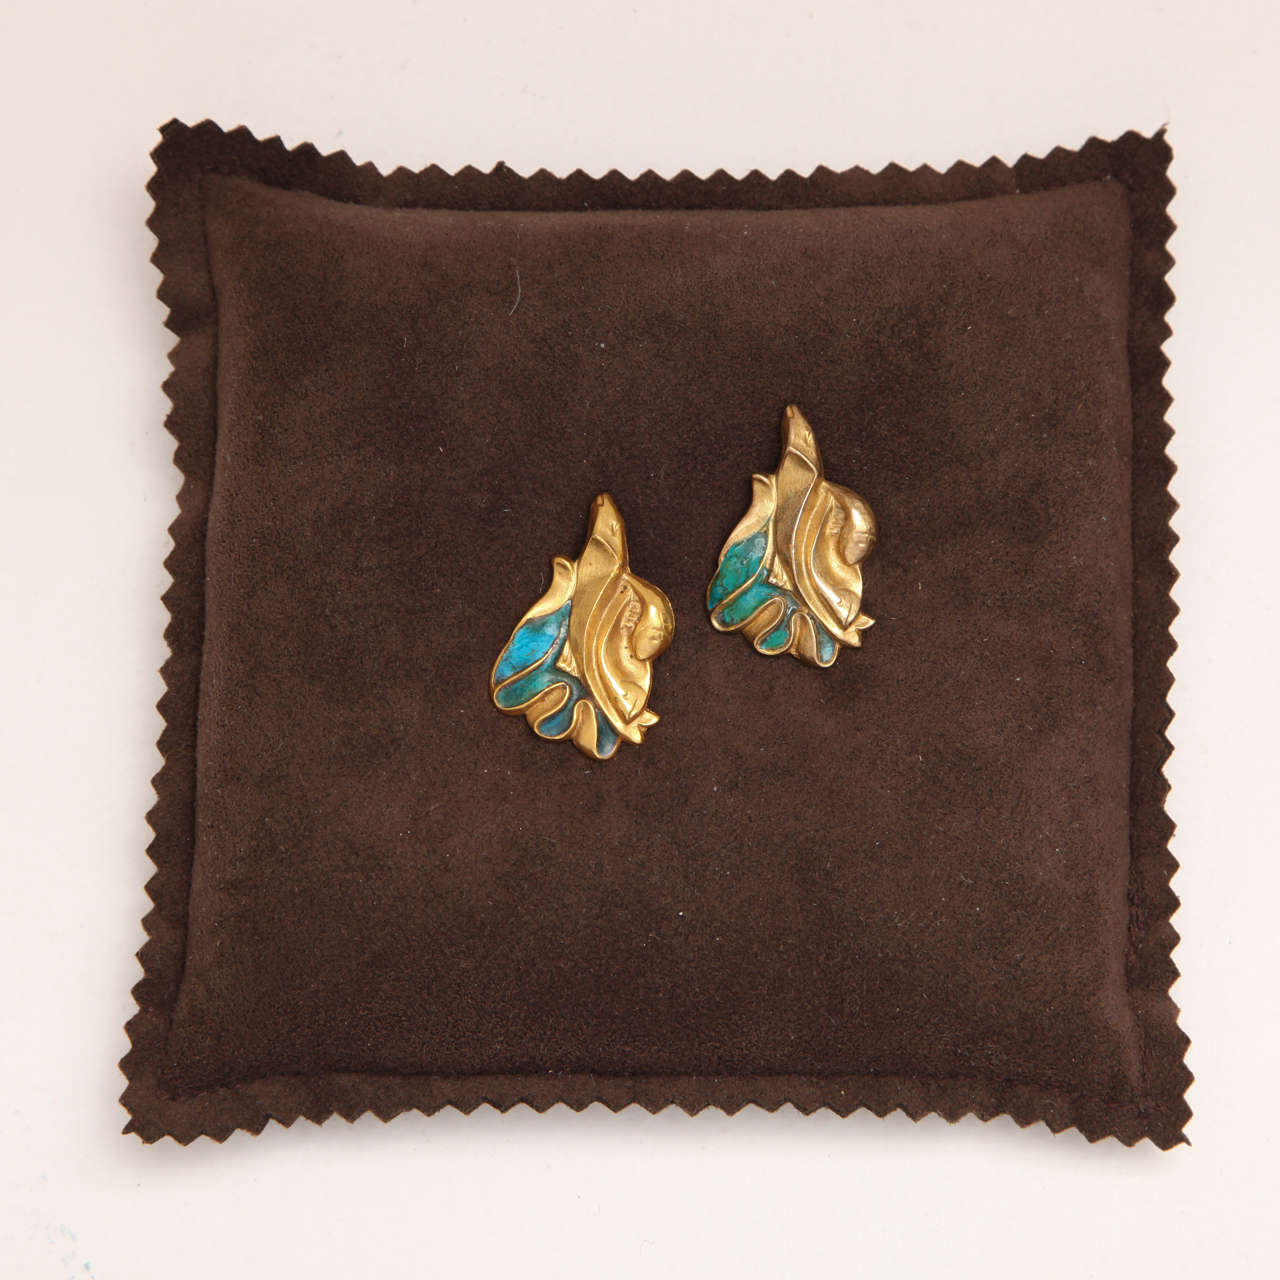 French Pair of Line Vautrin Earrings in Turquoise Enamelled Bronze